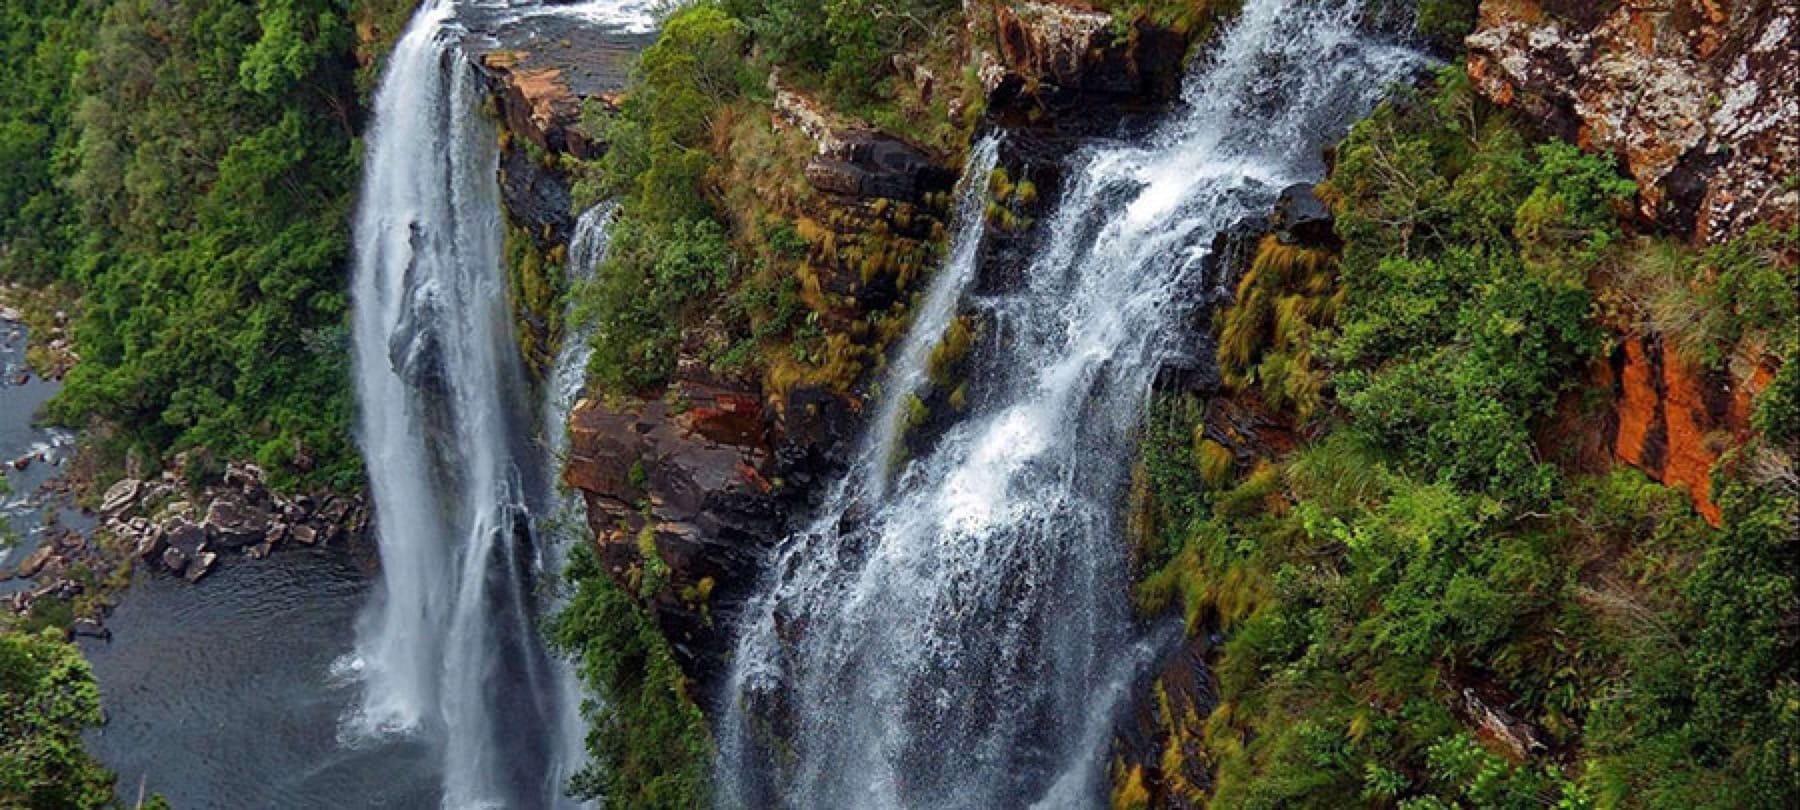 Mac Mac Falls along the panorama route south africa